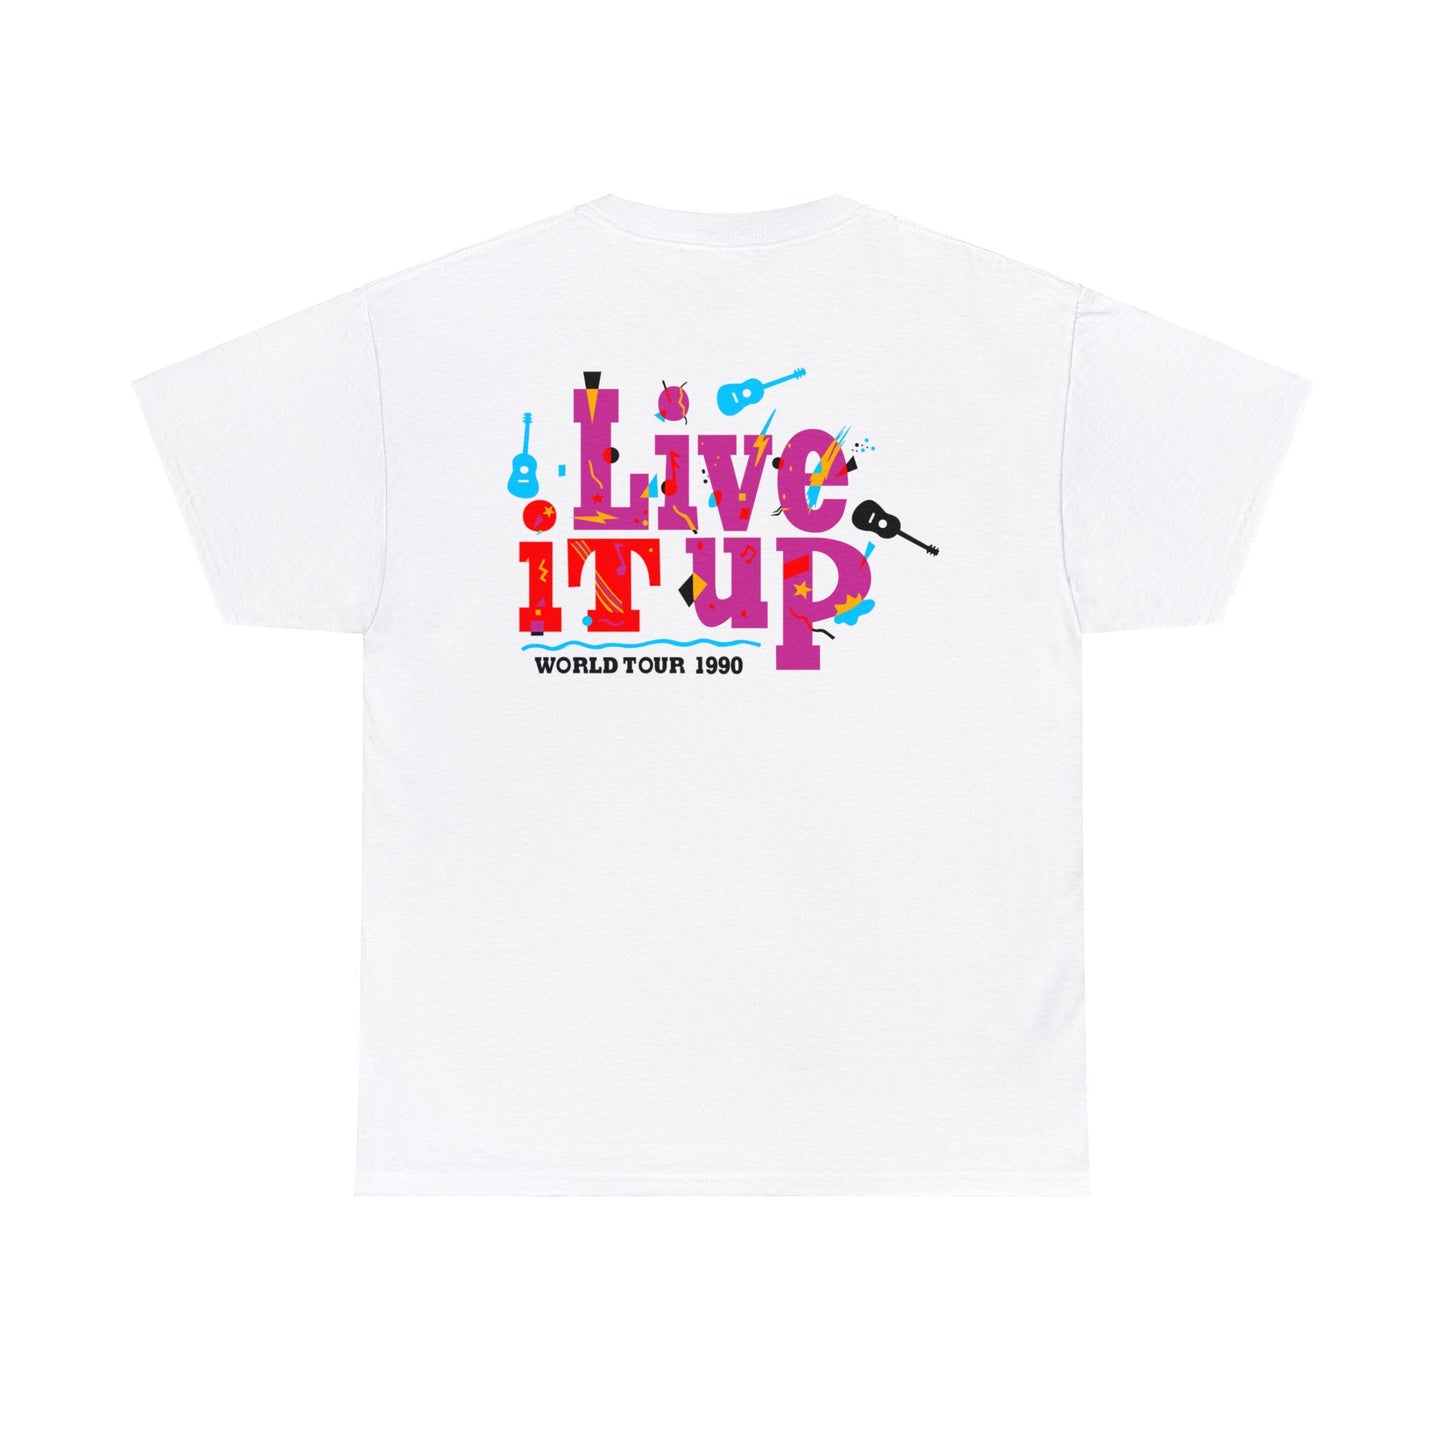 Crosby Stills & Nash Live It Up World Tour 1990 T-shirt for Sale